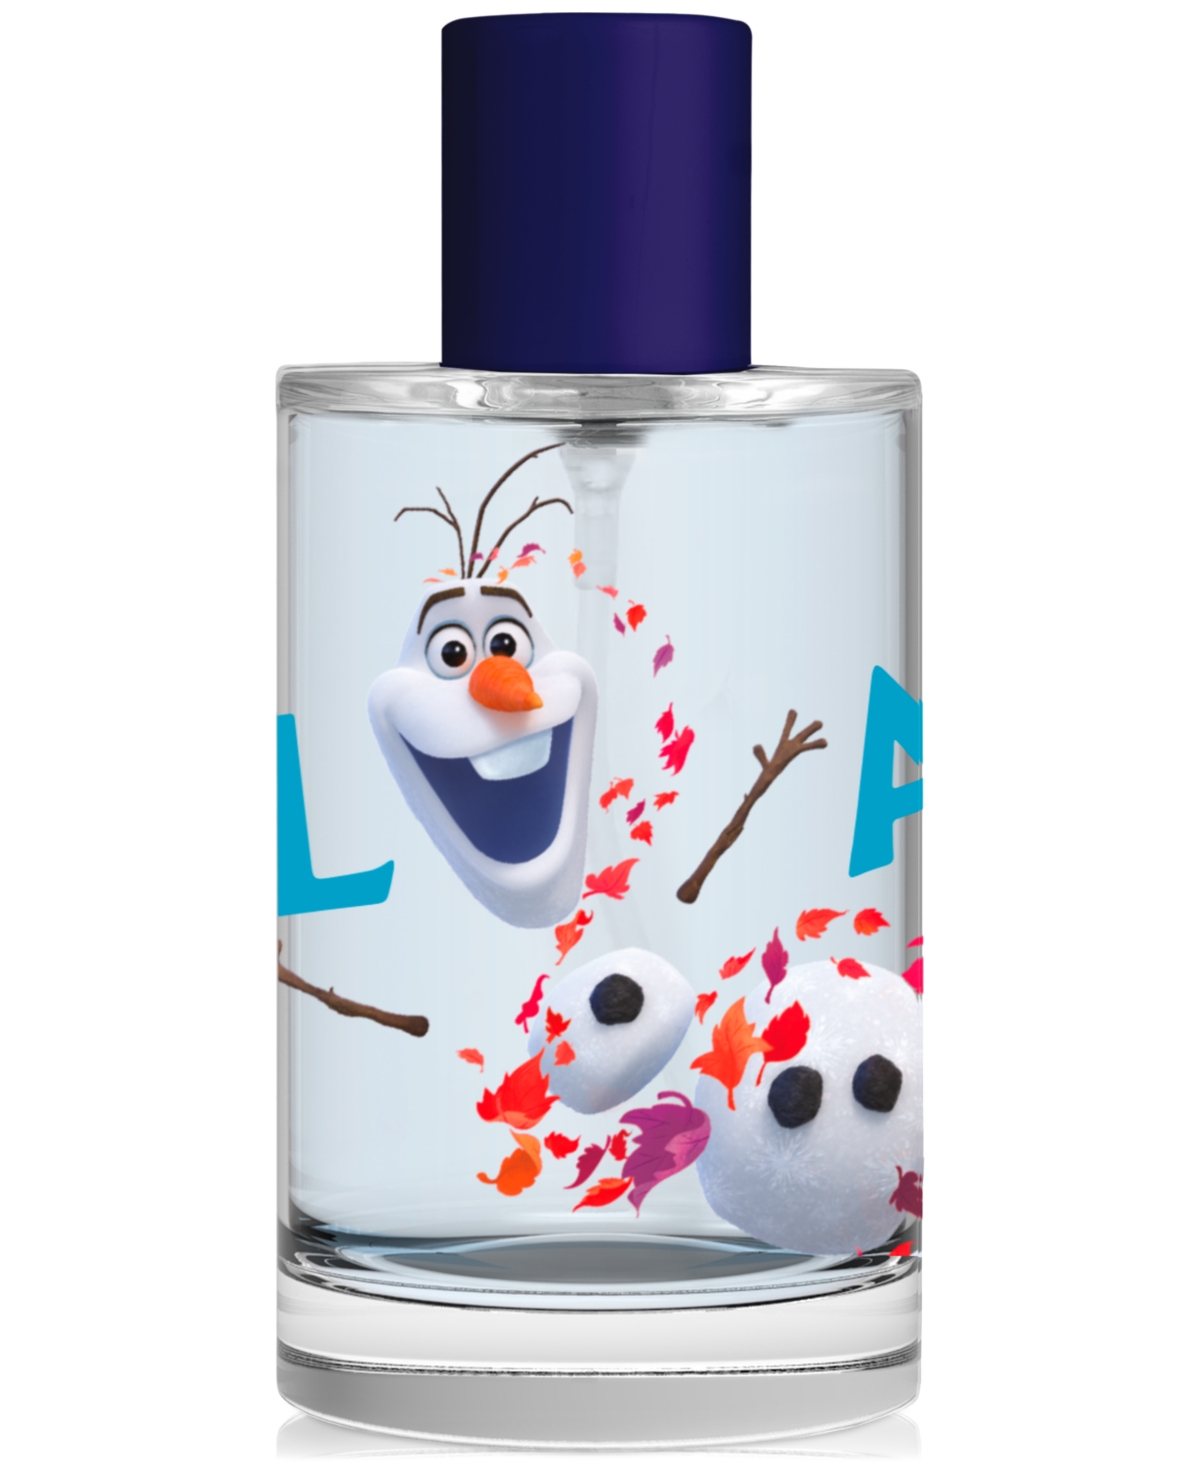 Frozen Olaf Eau de Toilette Spray, 3.4 oz.